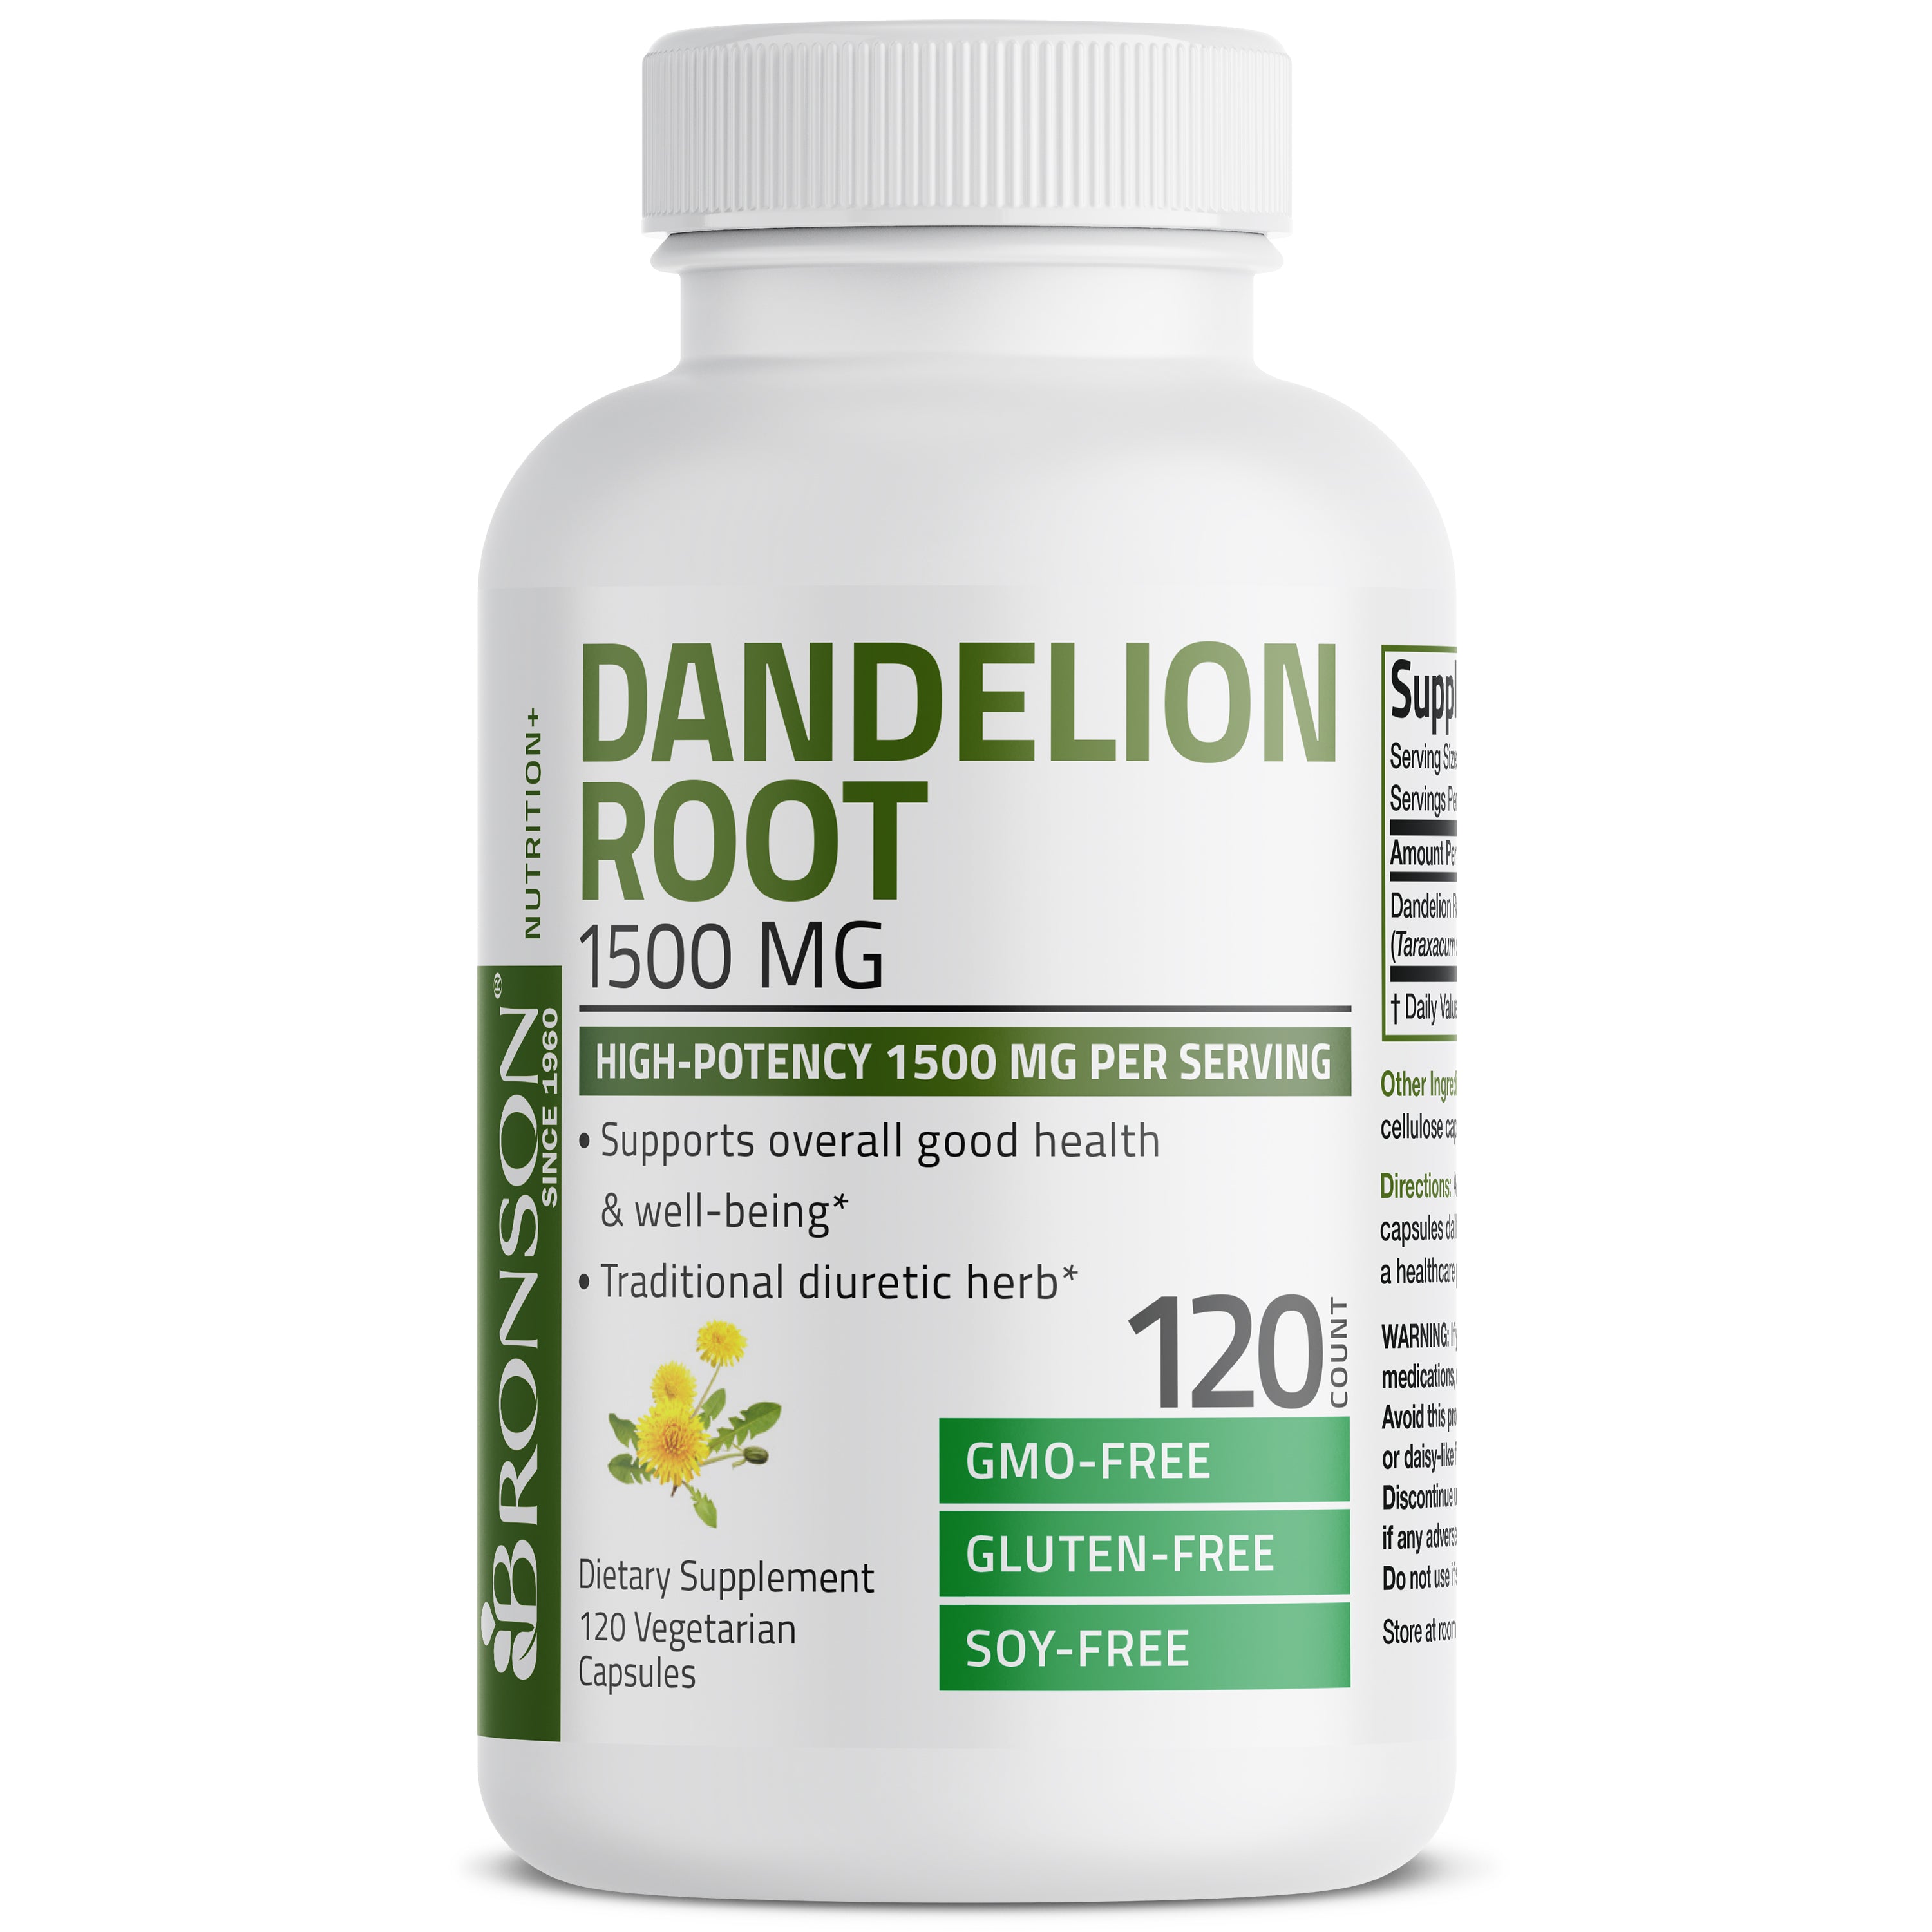 Dandelion Root 1500 MG per Serving view 3 of 6